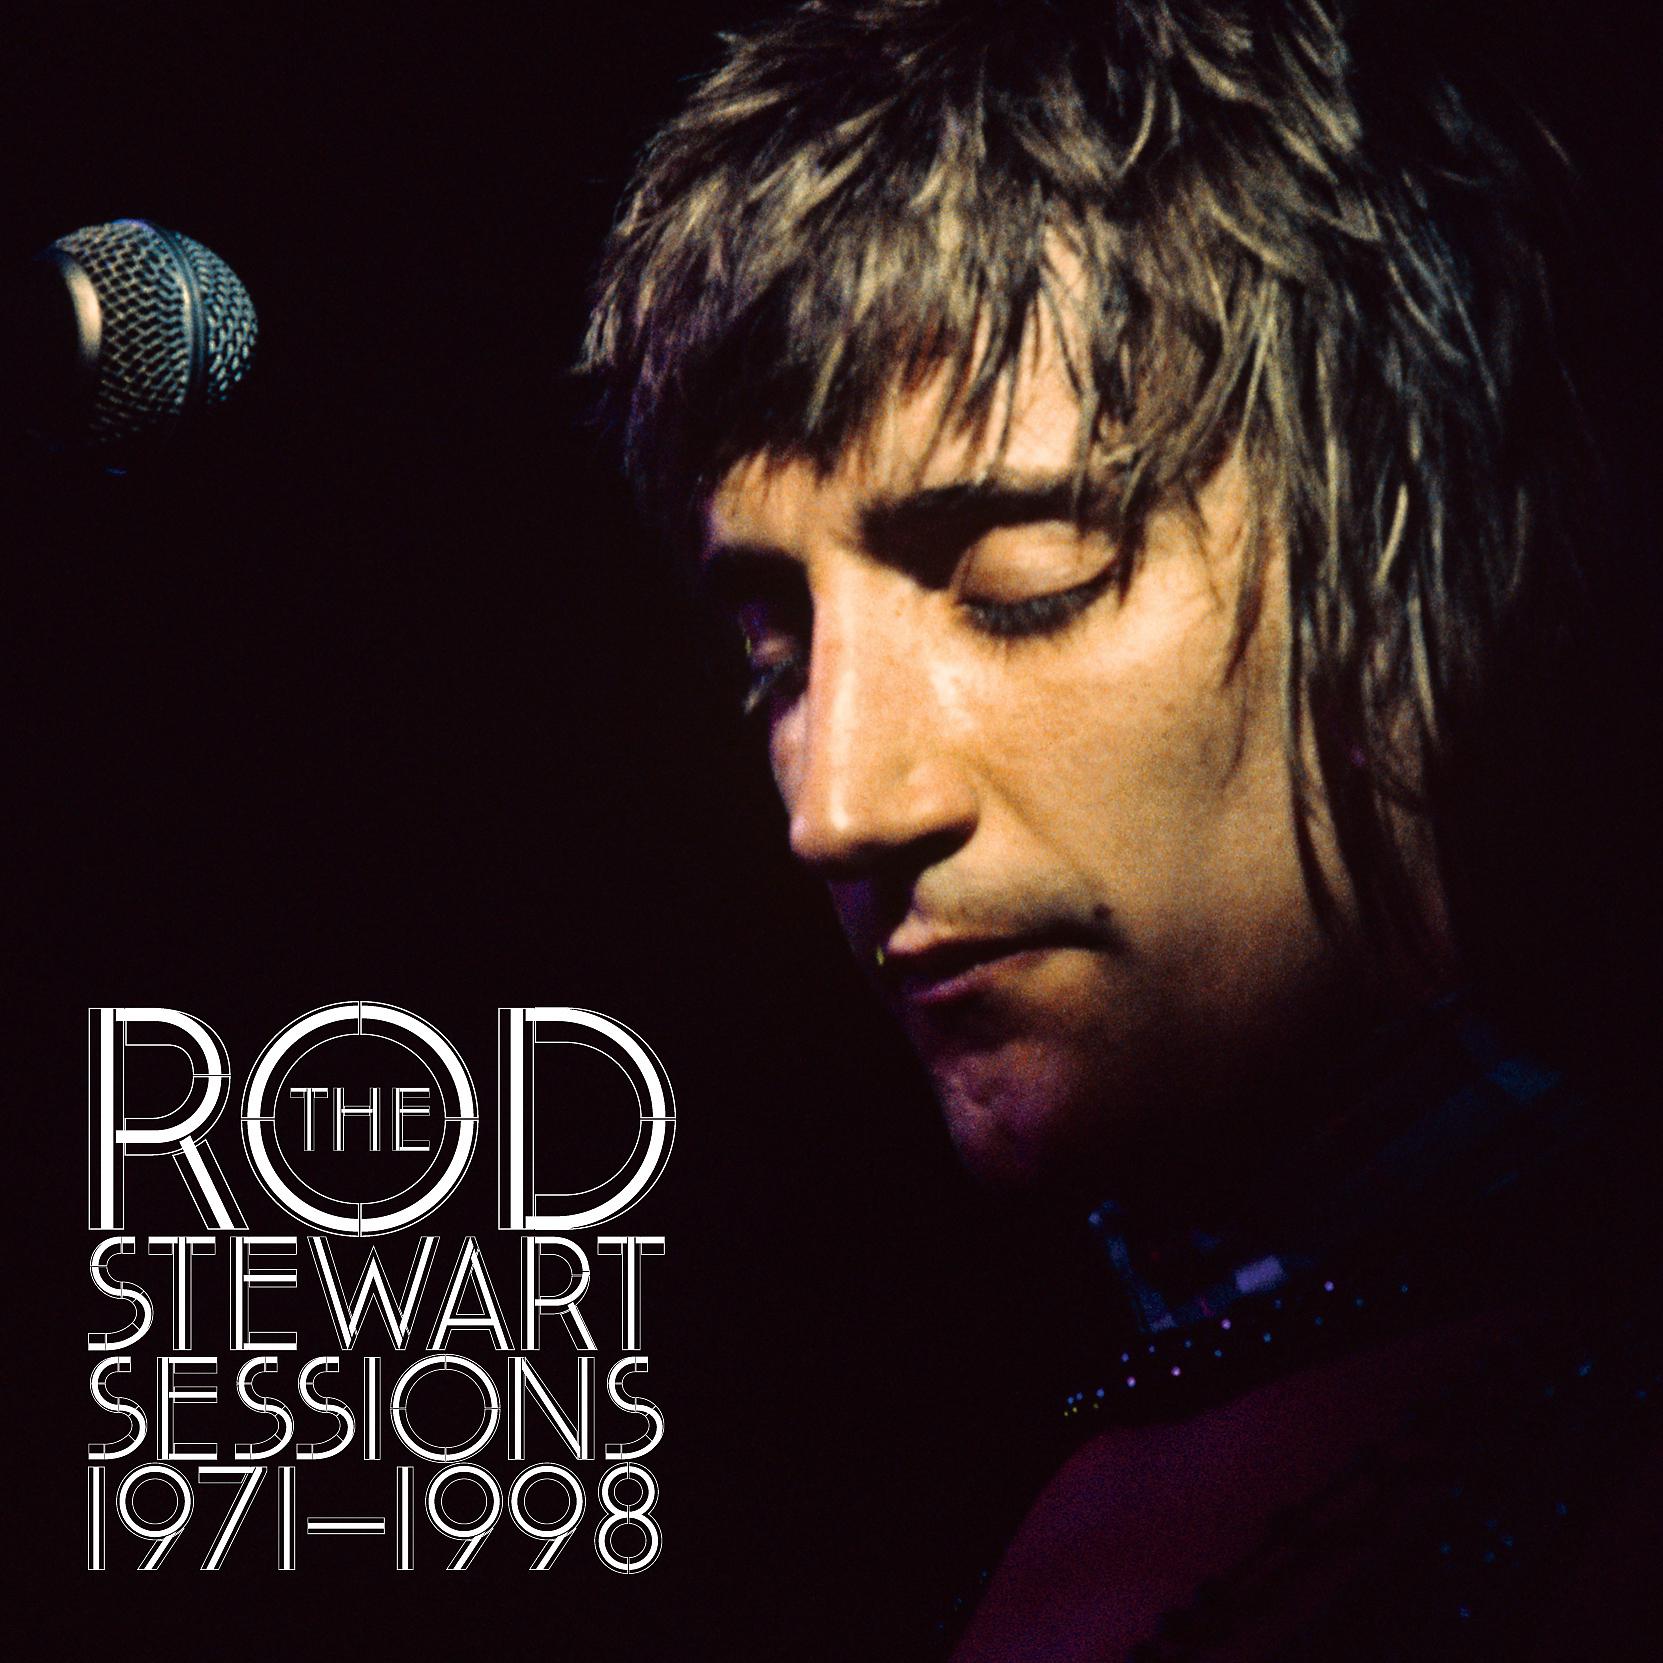 Род стюарт слушать лучшие. Rod Stewart. The Rod Stewart sessions 1971-1998. Rod Stewart сессия. Rod Stewart 1971.